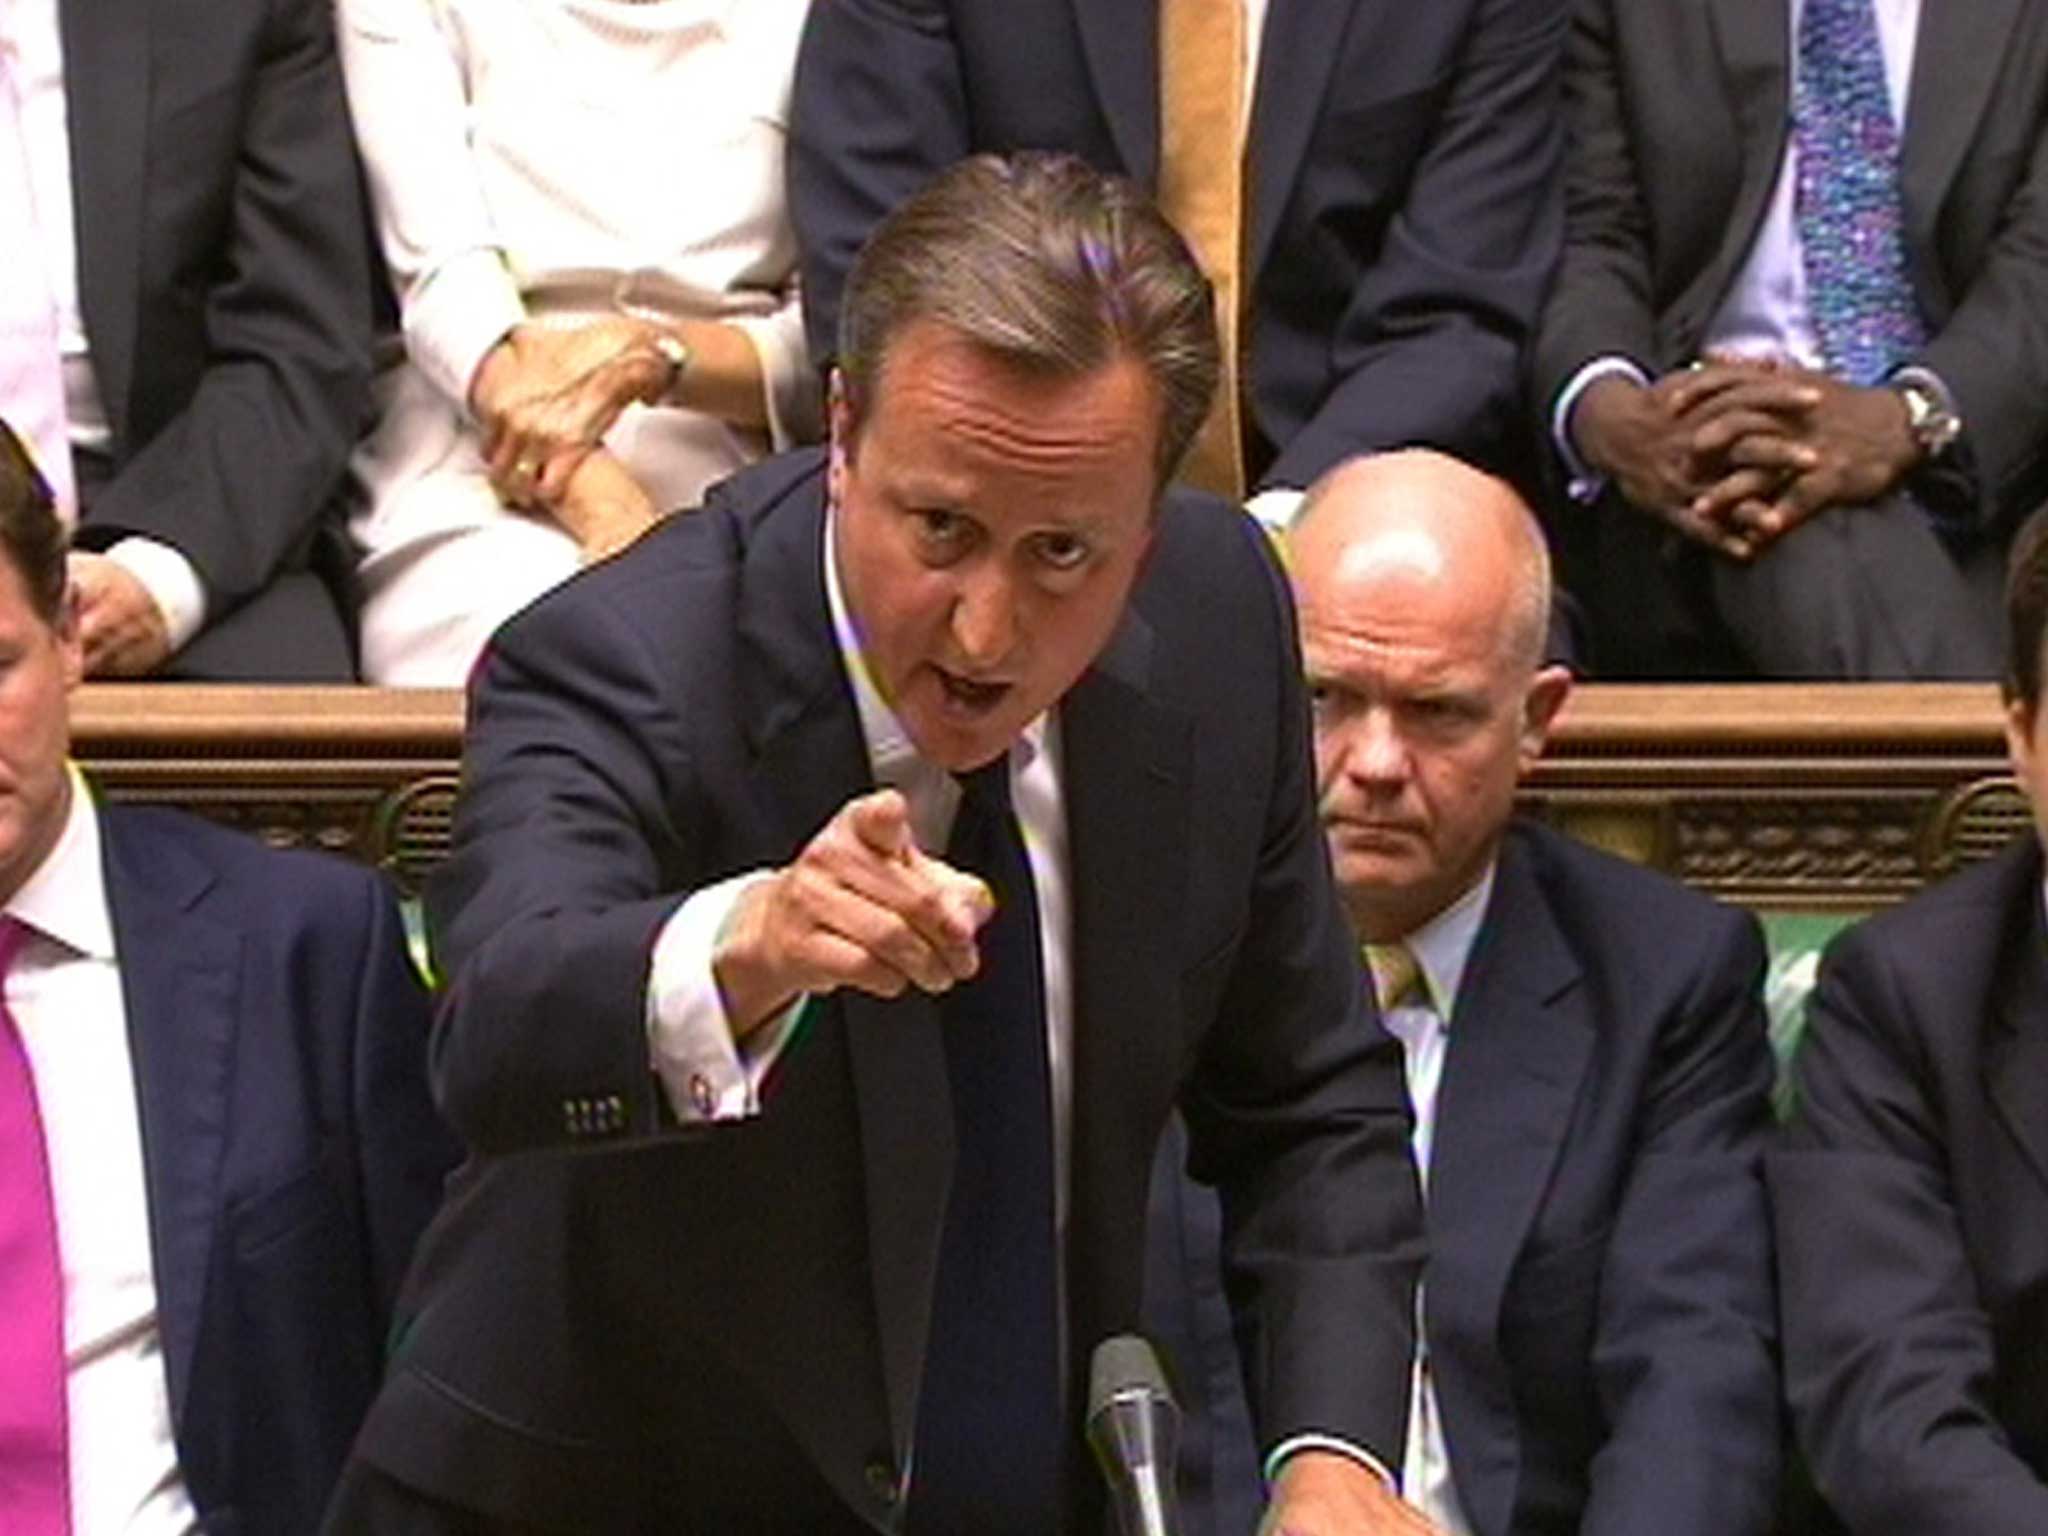 David Cameron speaks during the debate on Syria